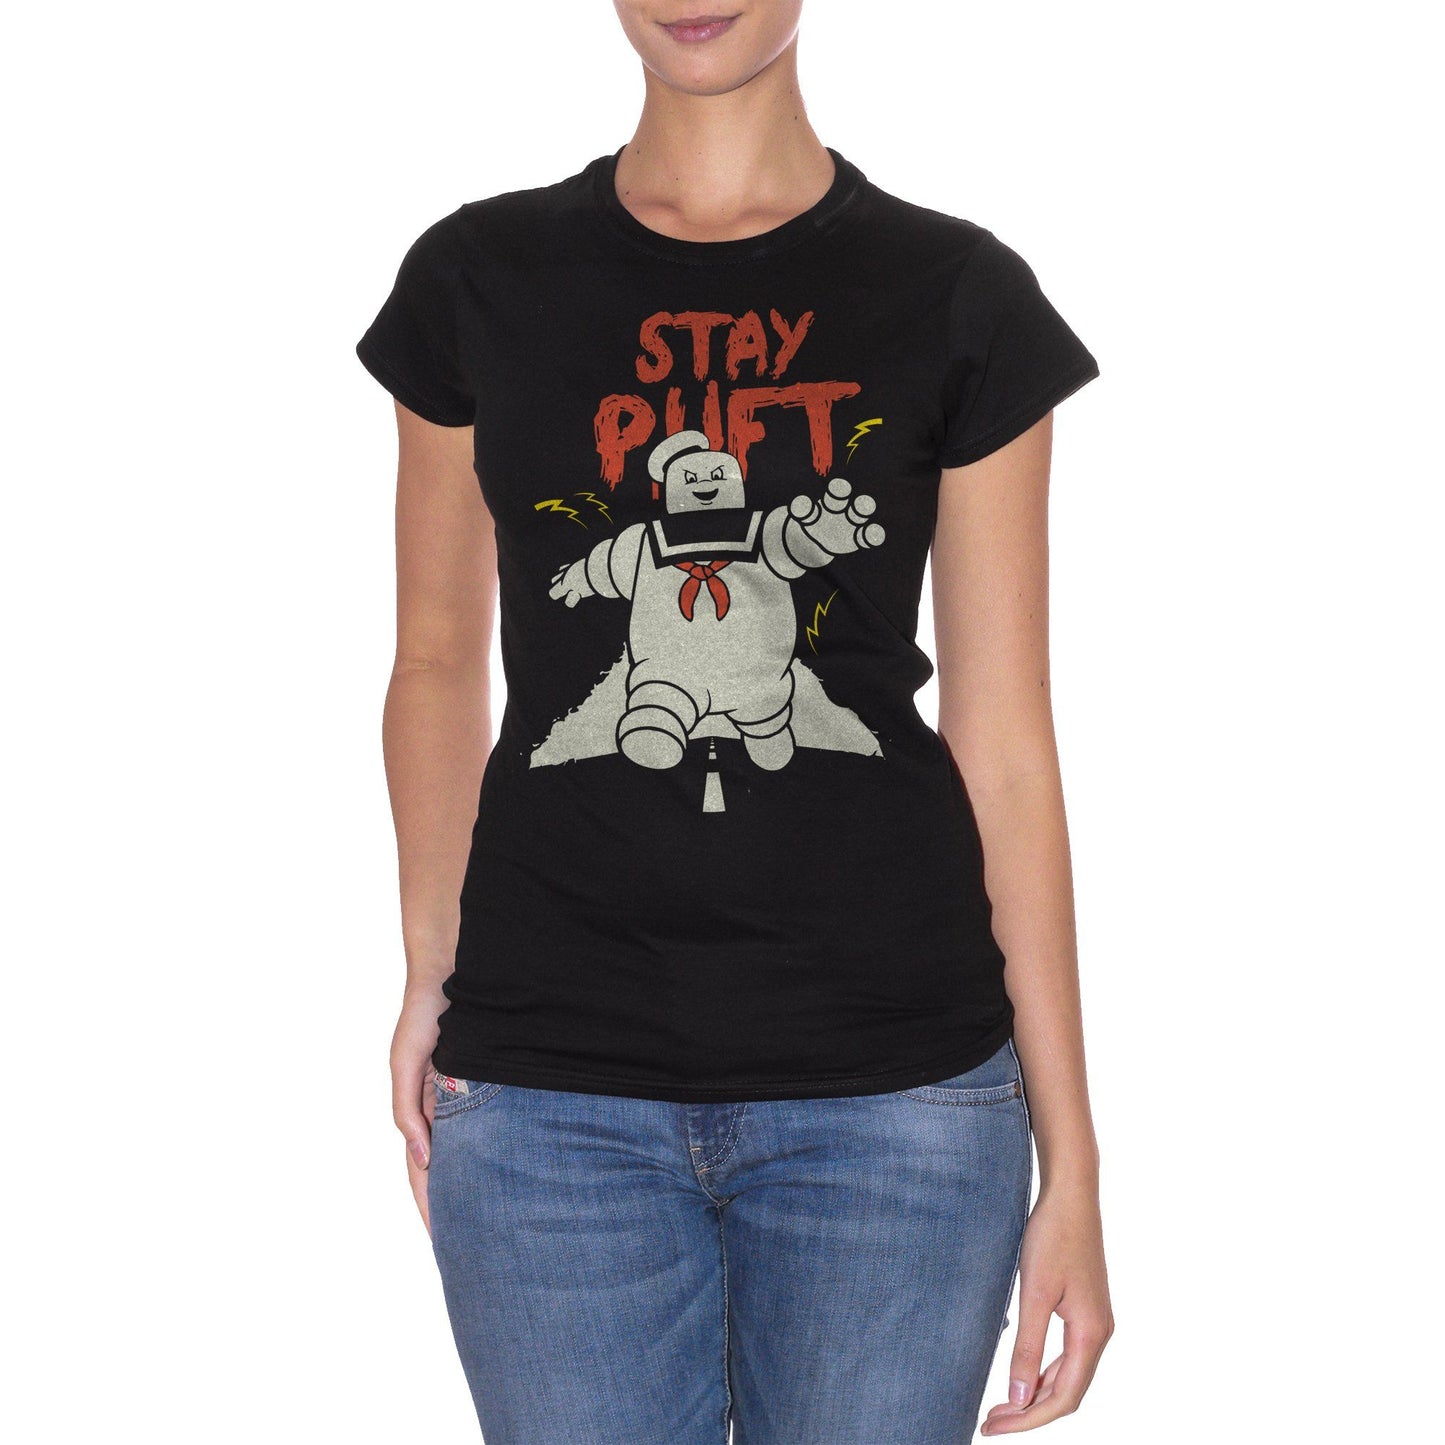 Black T-Shirt Stay Puft - Marshmallow Man Ghostbusters - FILM Choose ur color CucShop